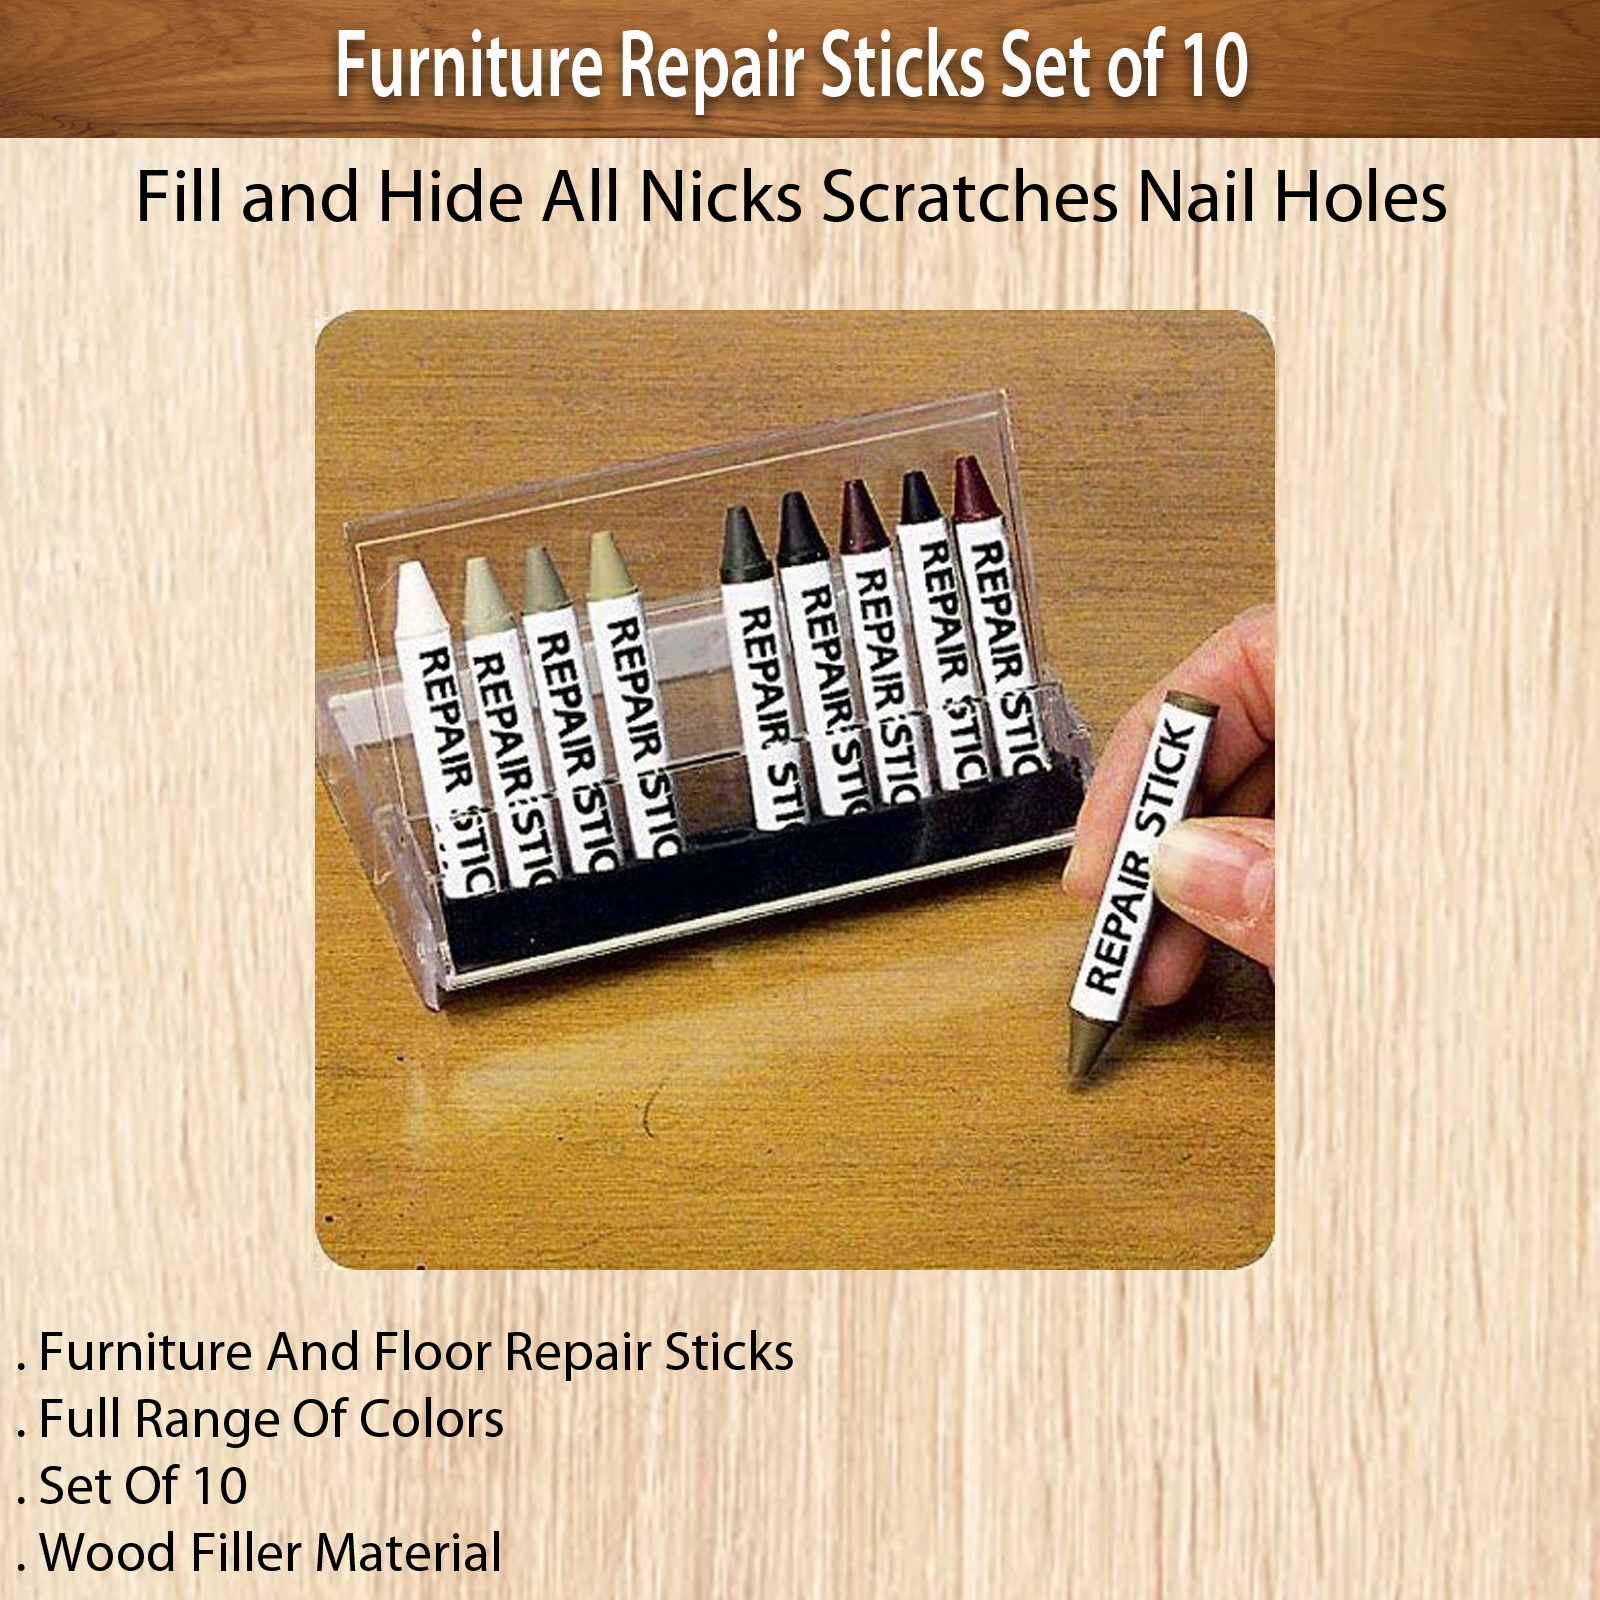 TV Direct Furniture Repair Sticks Set of 10